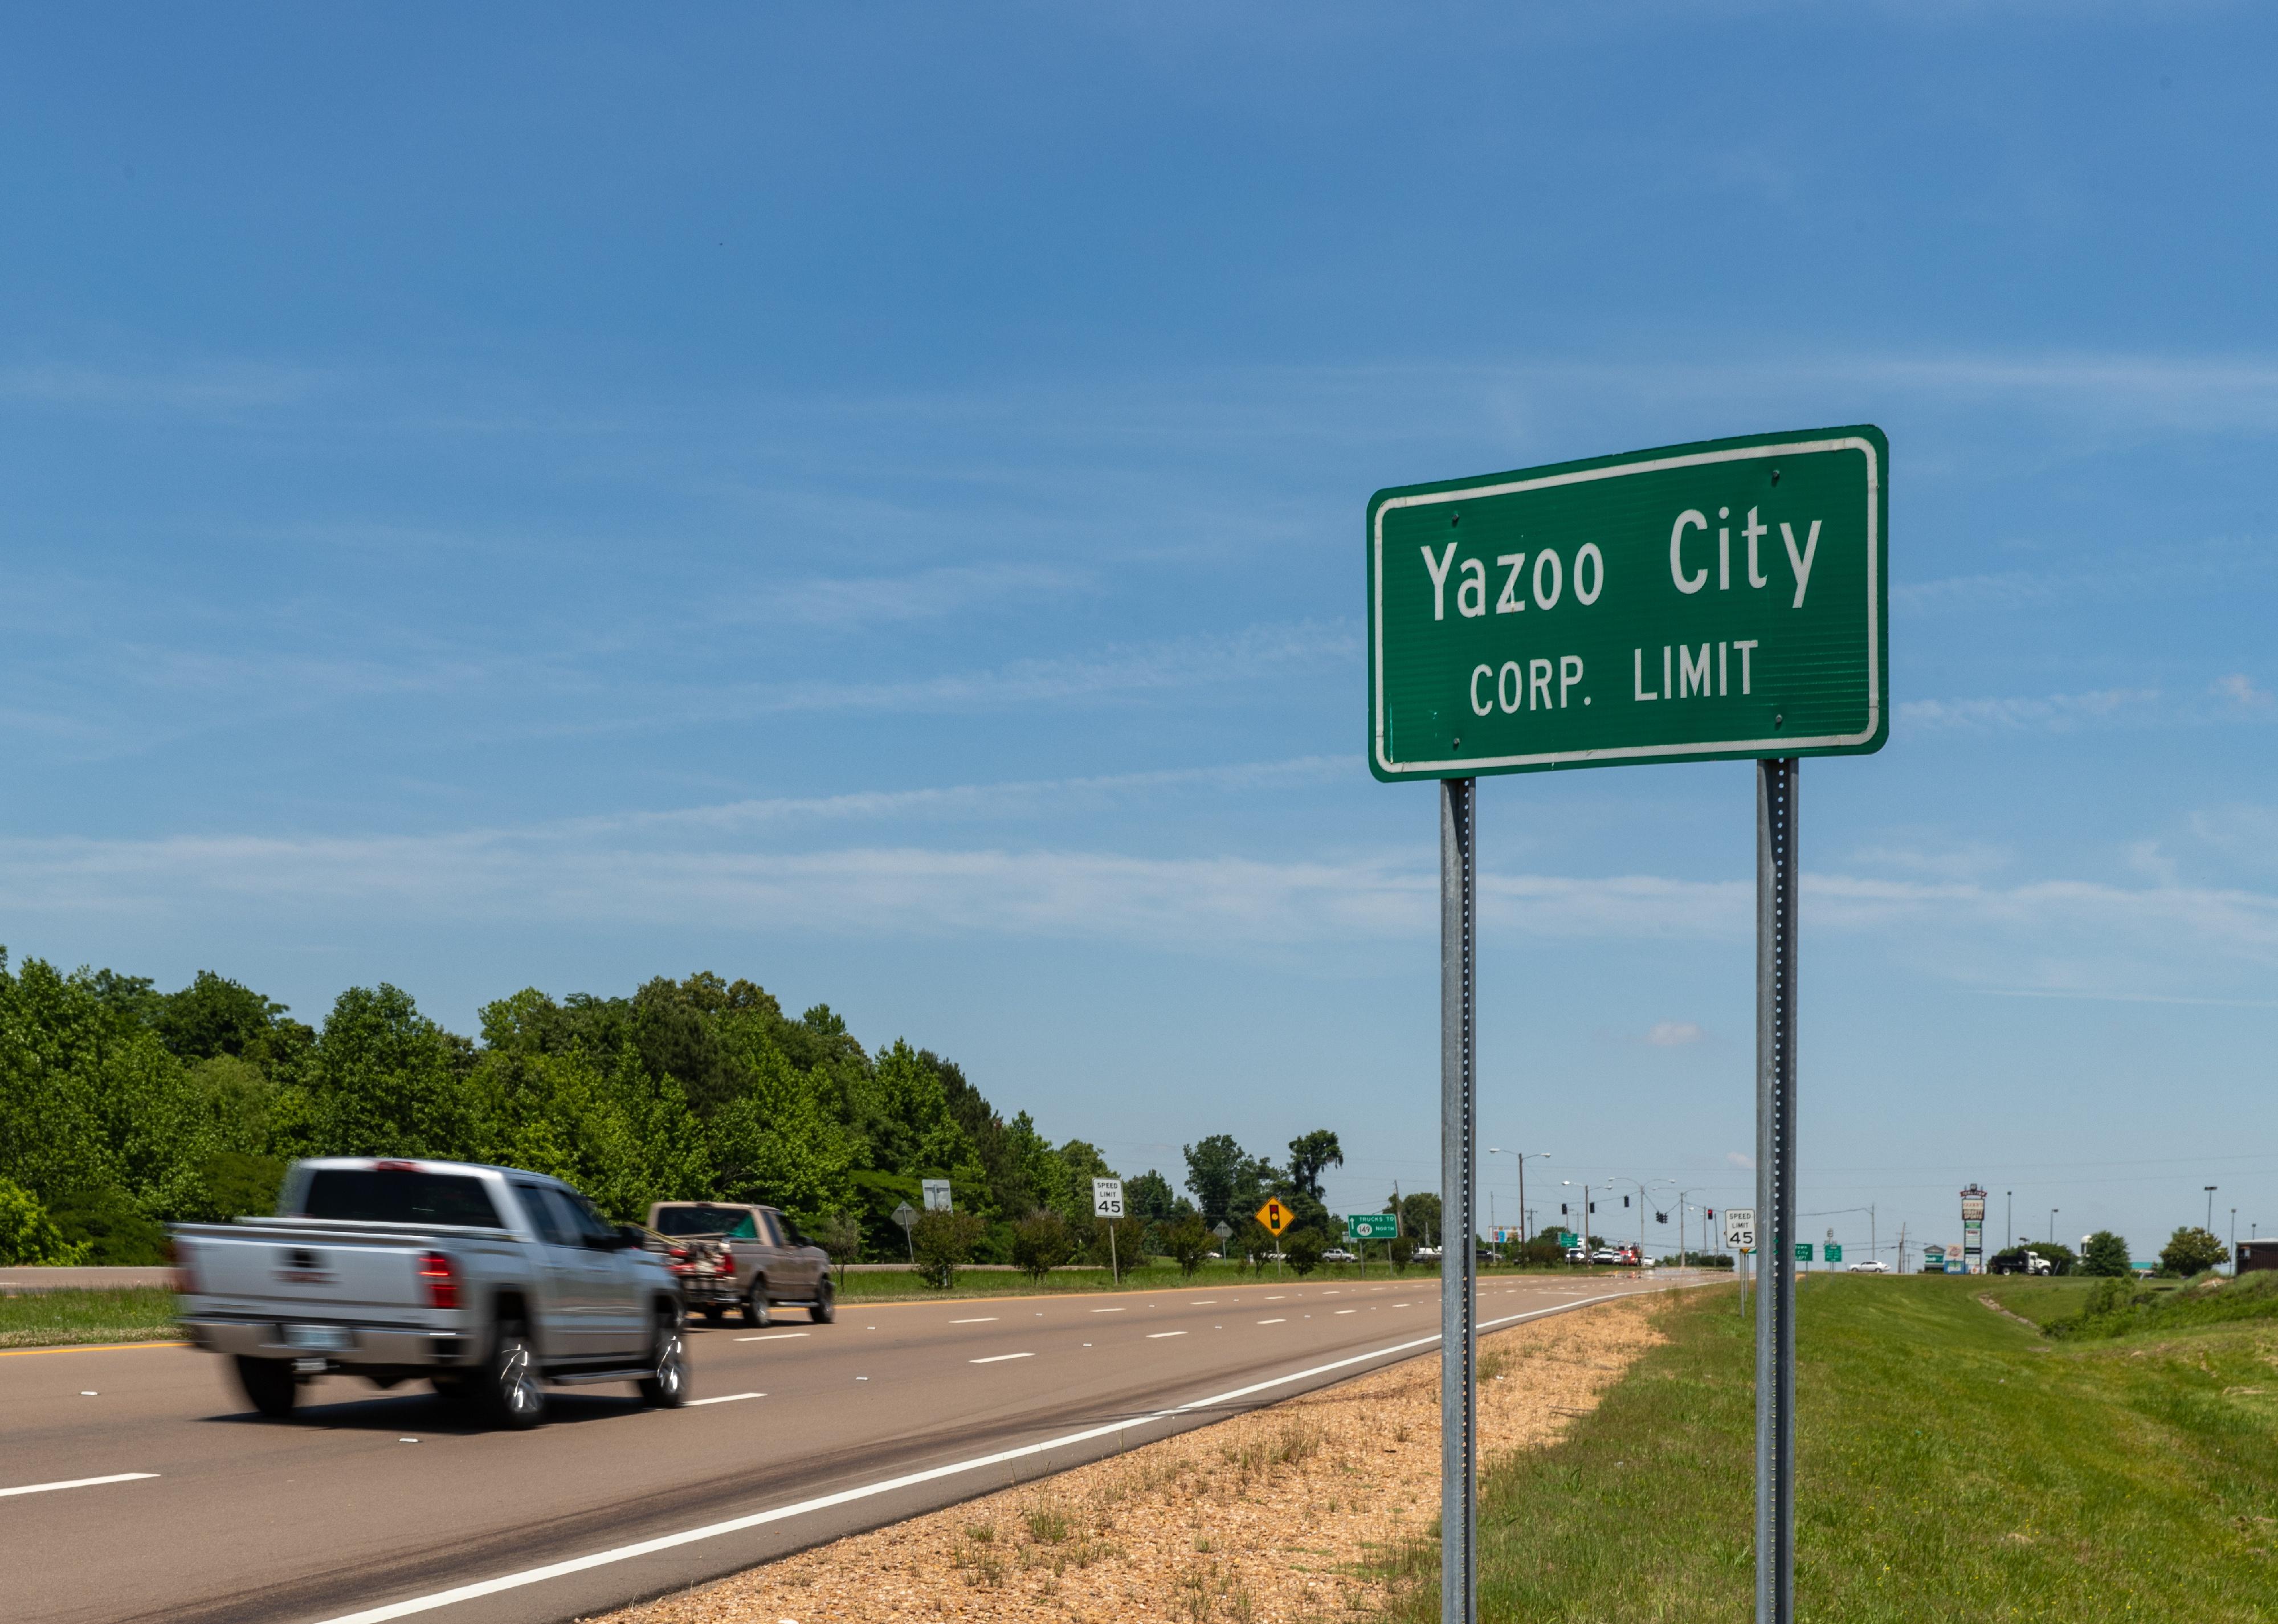 Yazoo City Corp limit sign.